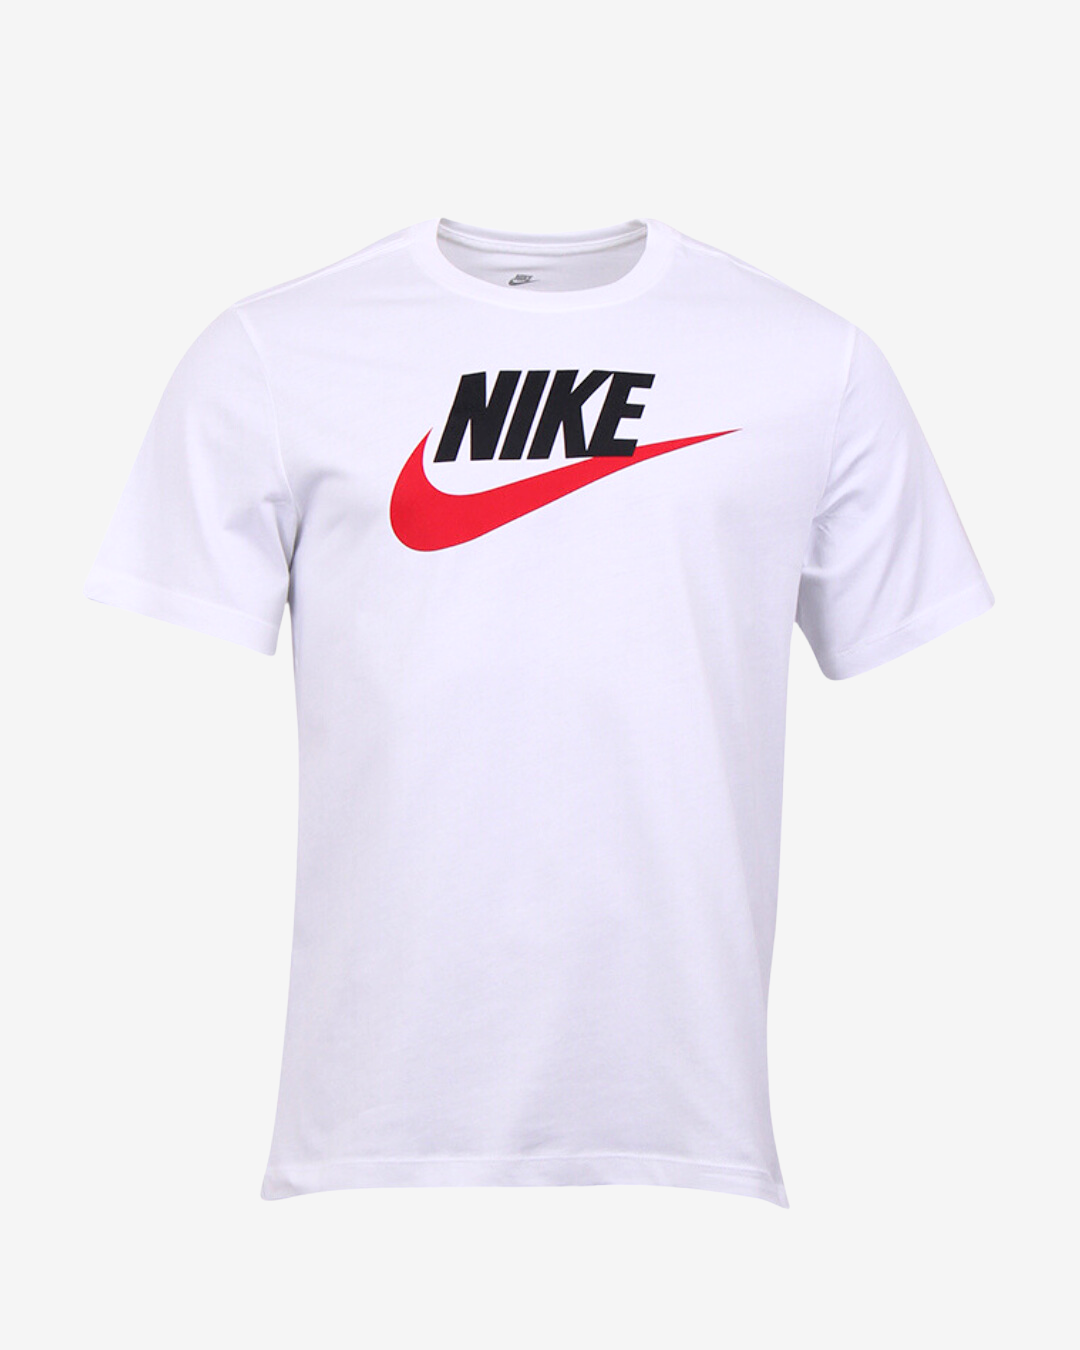 Nike Icon futura t-shirt - Hvid / Rød - Str. XXL - Modish.dk